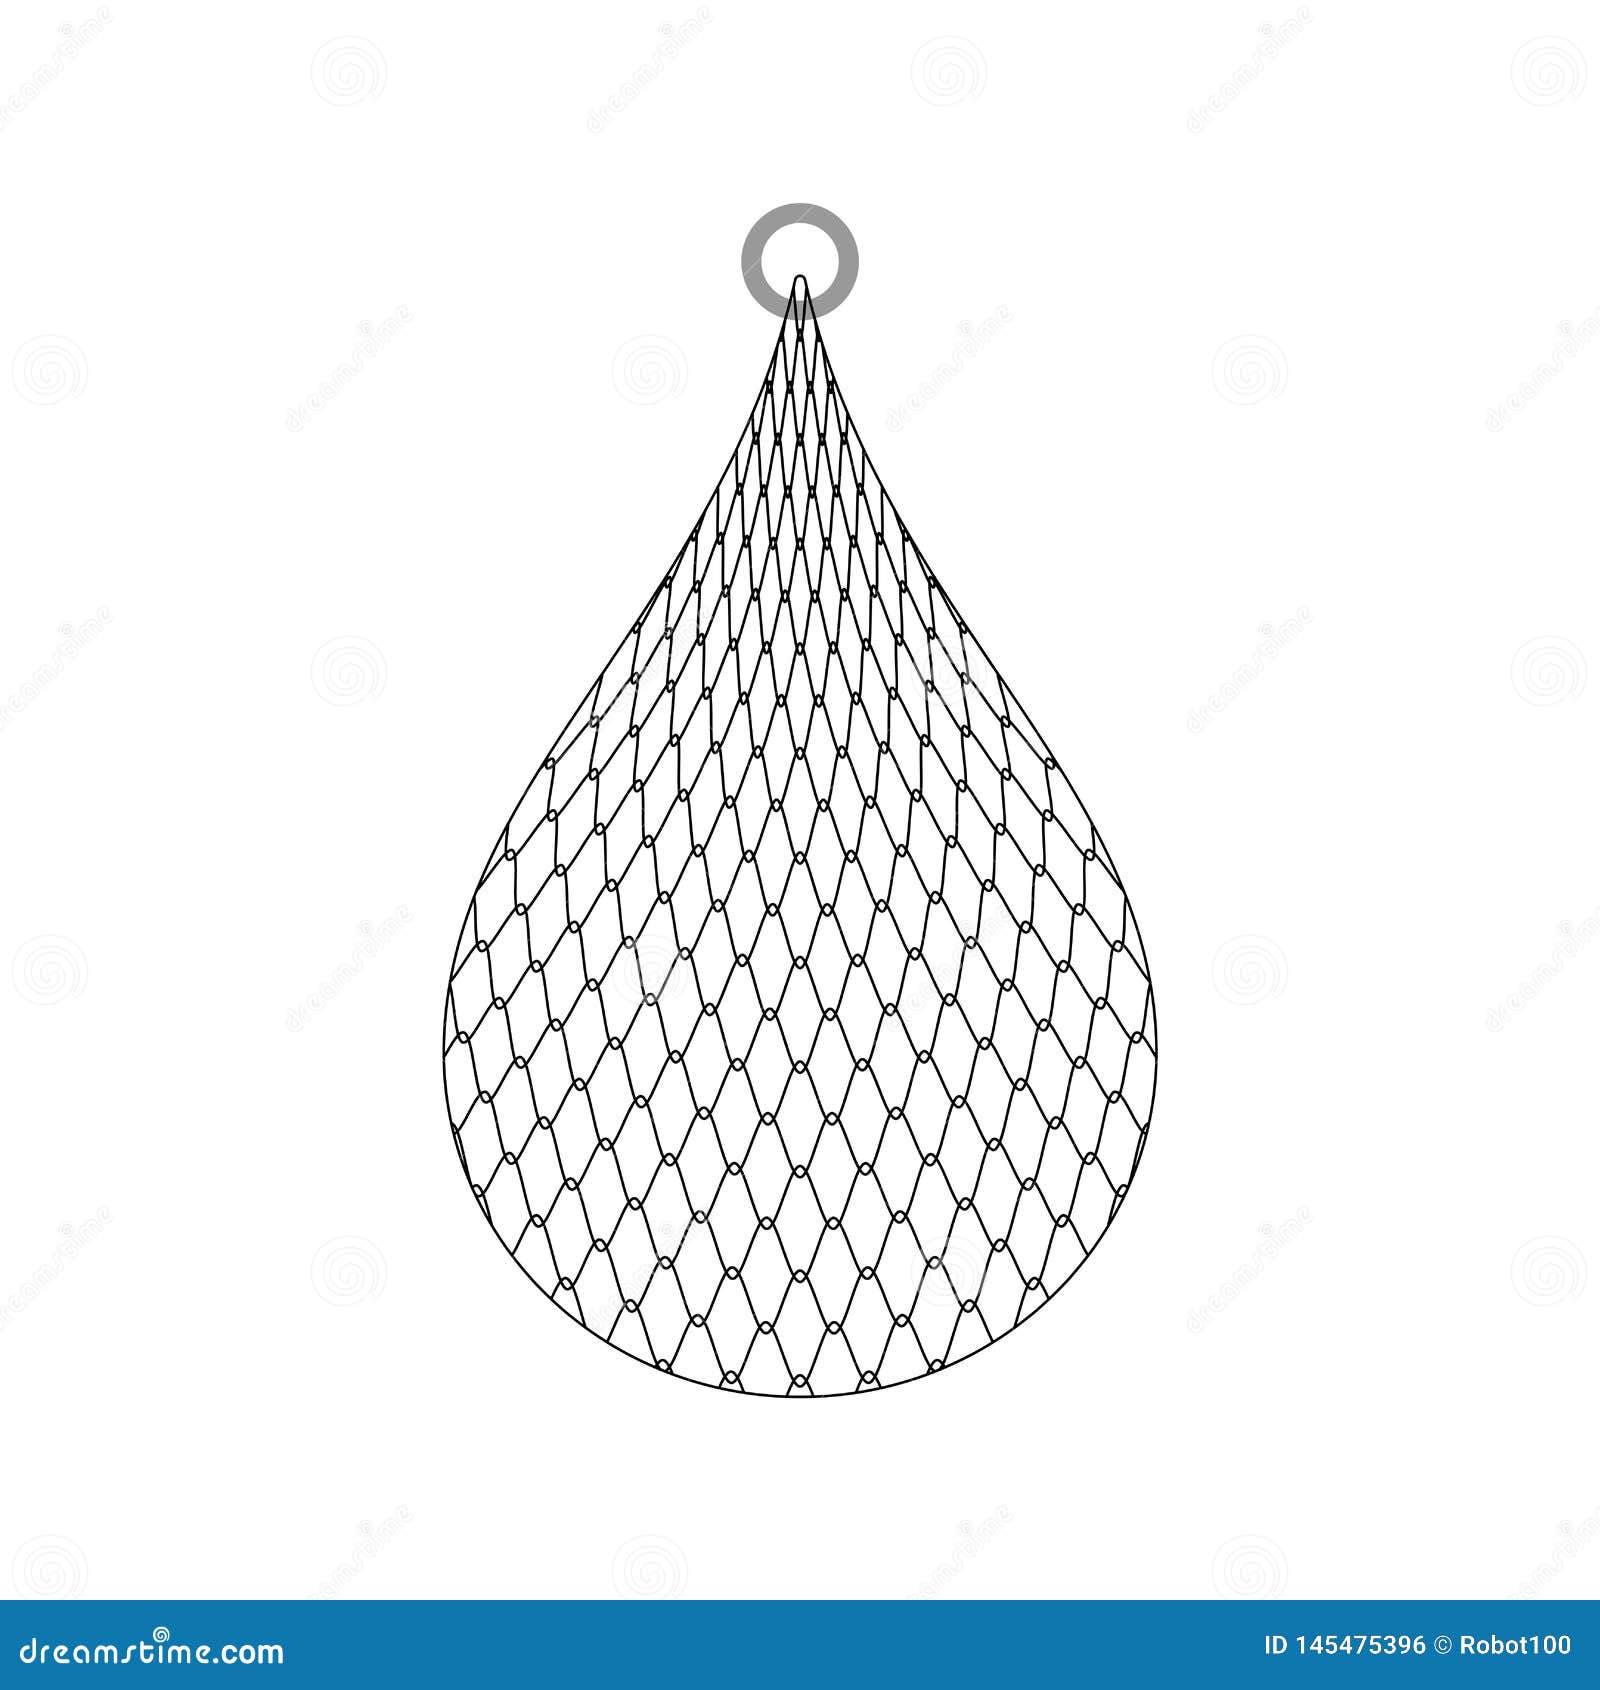 Fish Net Stockings Shape Stock Illustrations – 10 Fish Net Stockings Shape Stock  Illustrations, Vectors & Clipart - Dreamstime, vector fish net 